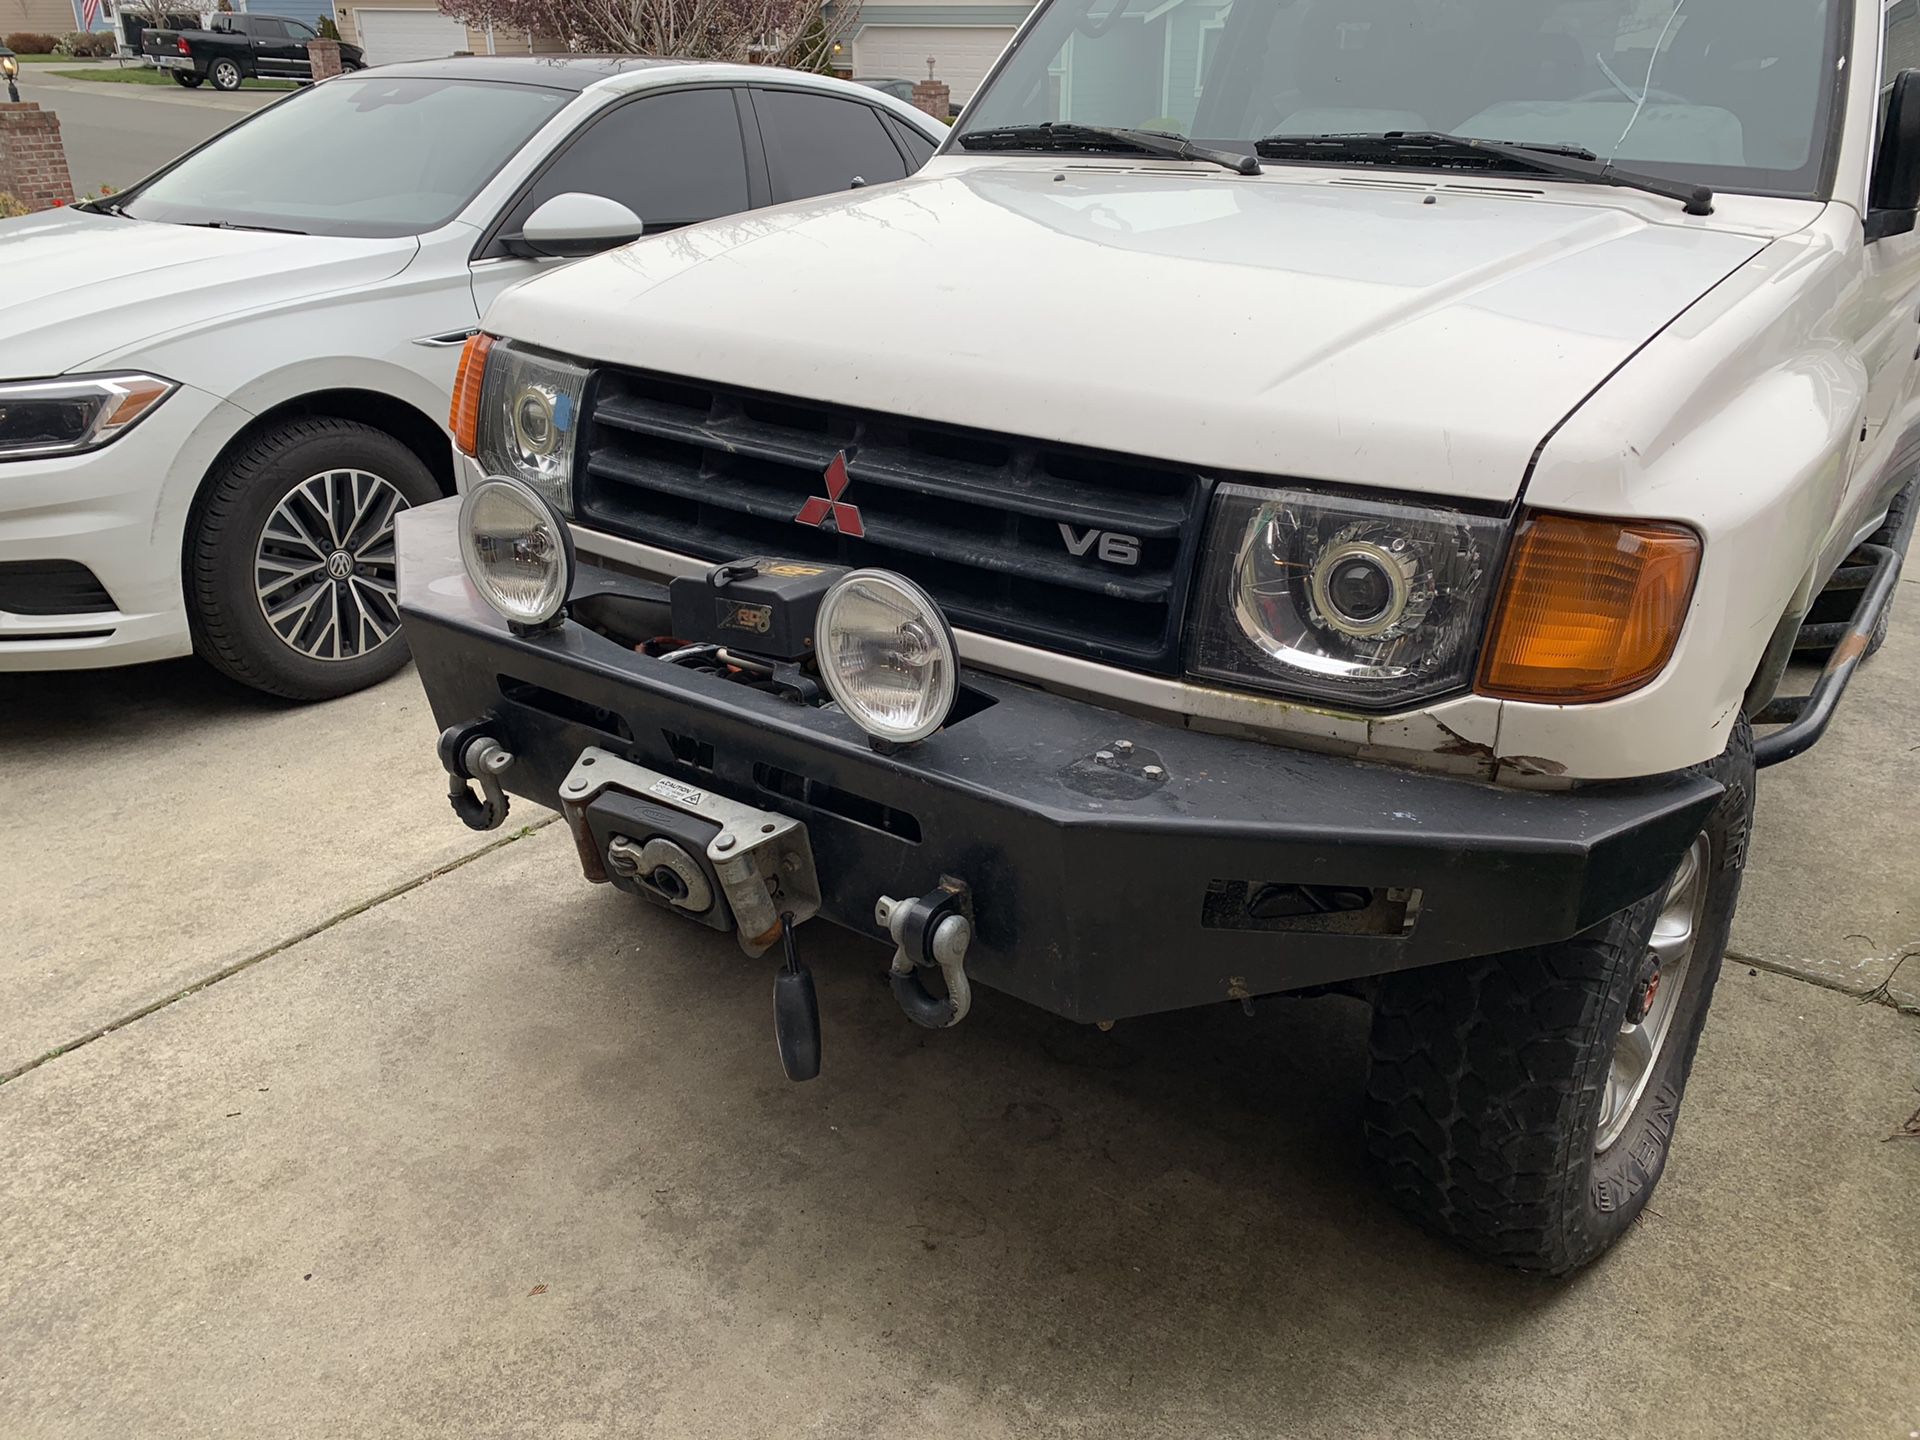 1989 - 1995 Toyota truck winch Warn bumper